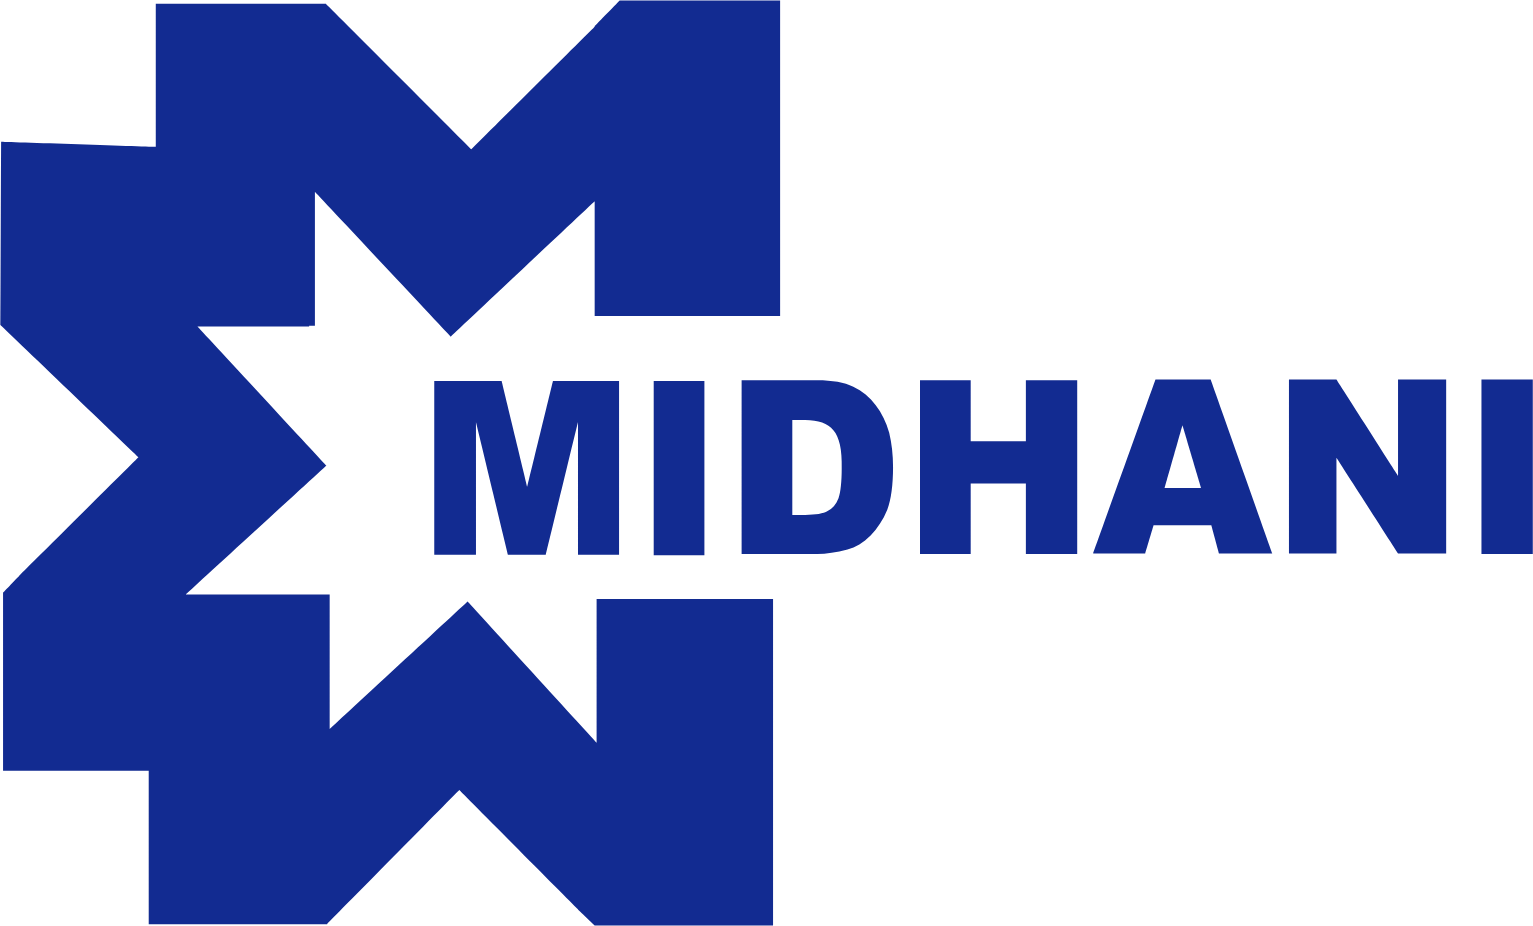 Mishra Dhatu Nigam logo large (transparent PNG)